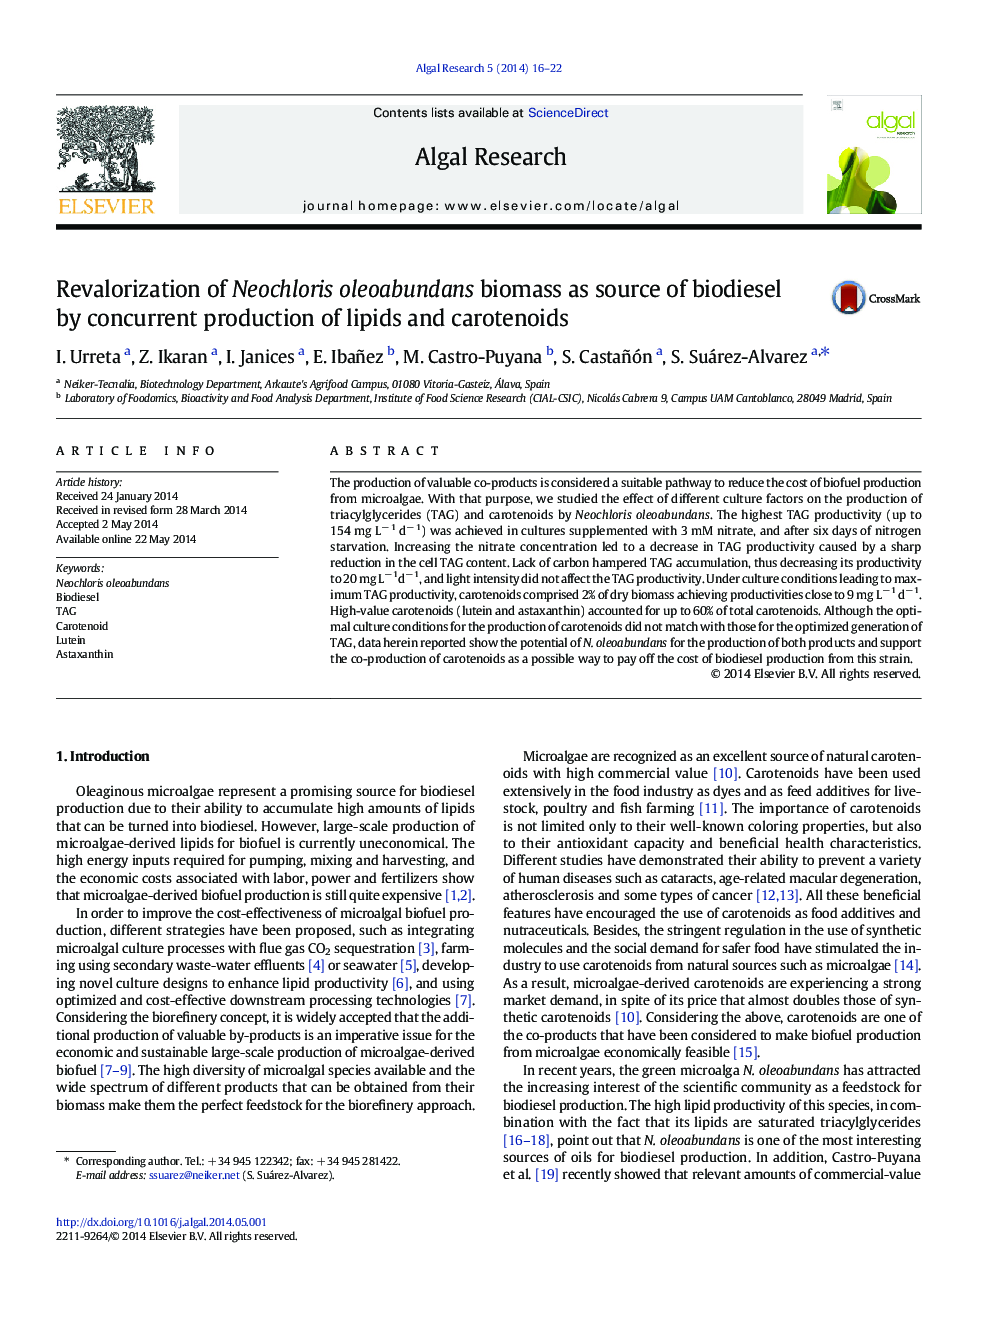 Revalorization of Neochloris oleoabundans biomass as source of biodiesel by concurrent production of lipids and carotenoids